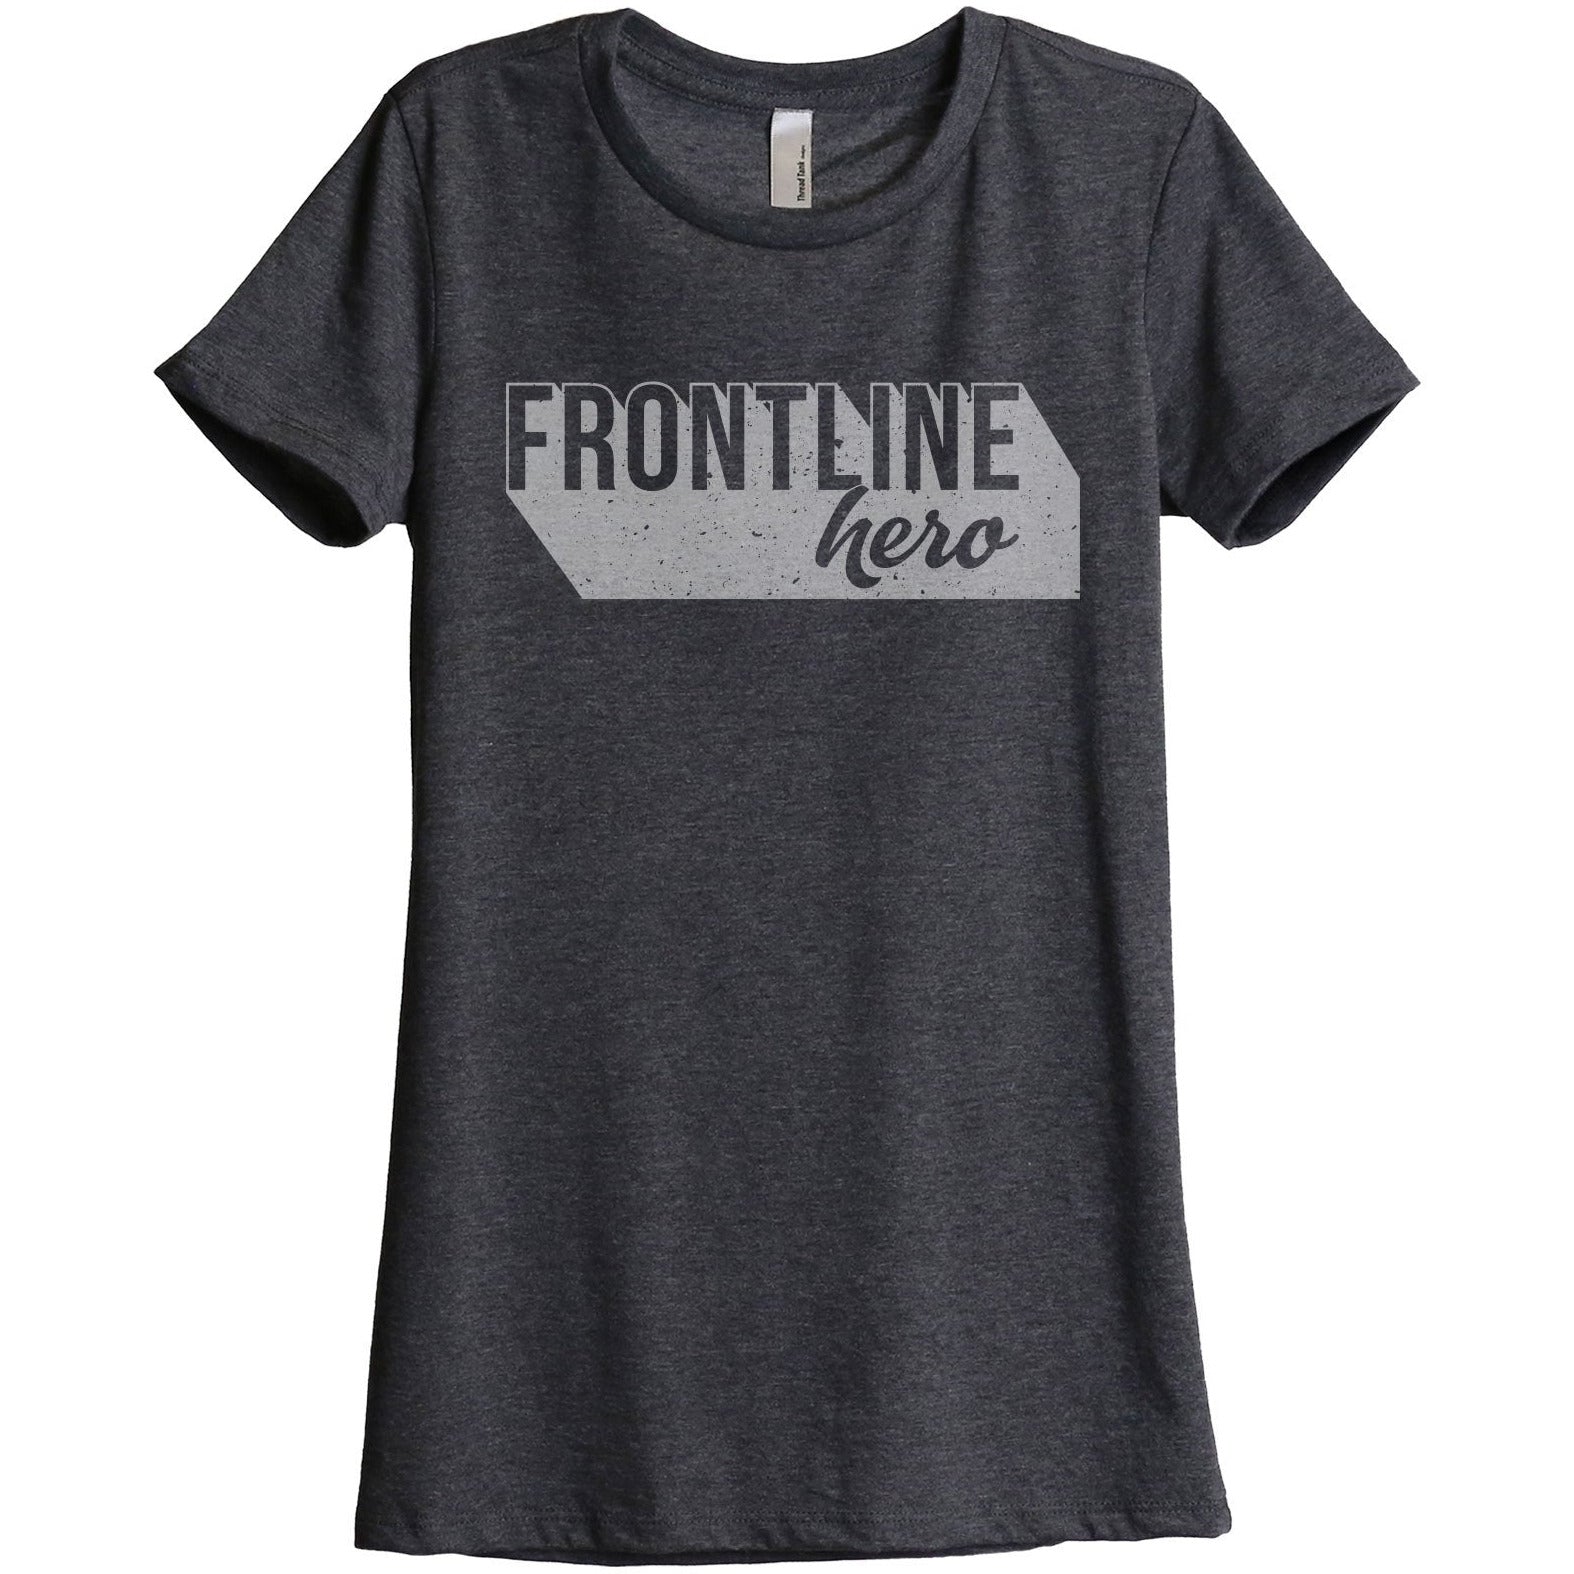 Frontline Hero Women's Relaxed Crewneck T-Shirt Top Tee Charcoal Grey
